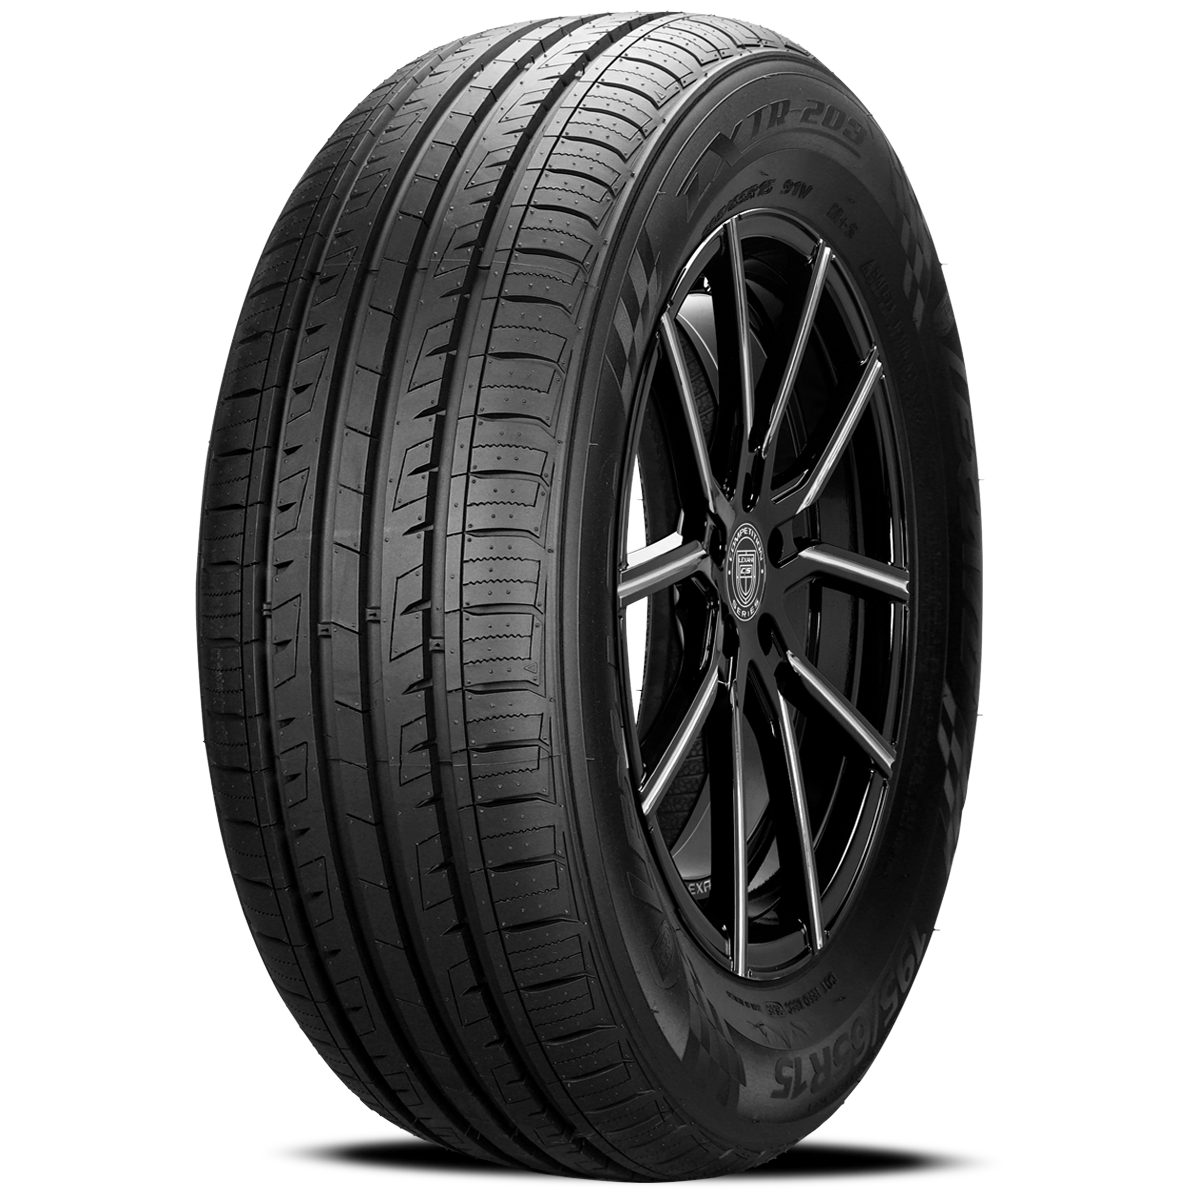 LEXANI LXTR-203 185/55R15 (23X7.3R 15) Tires